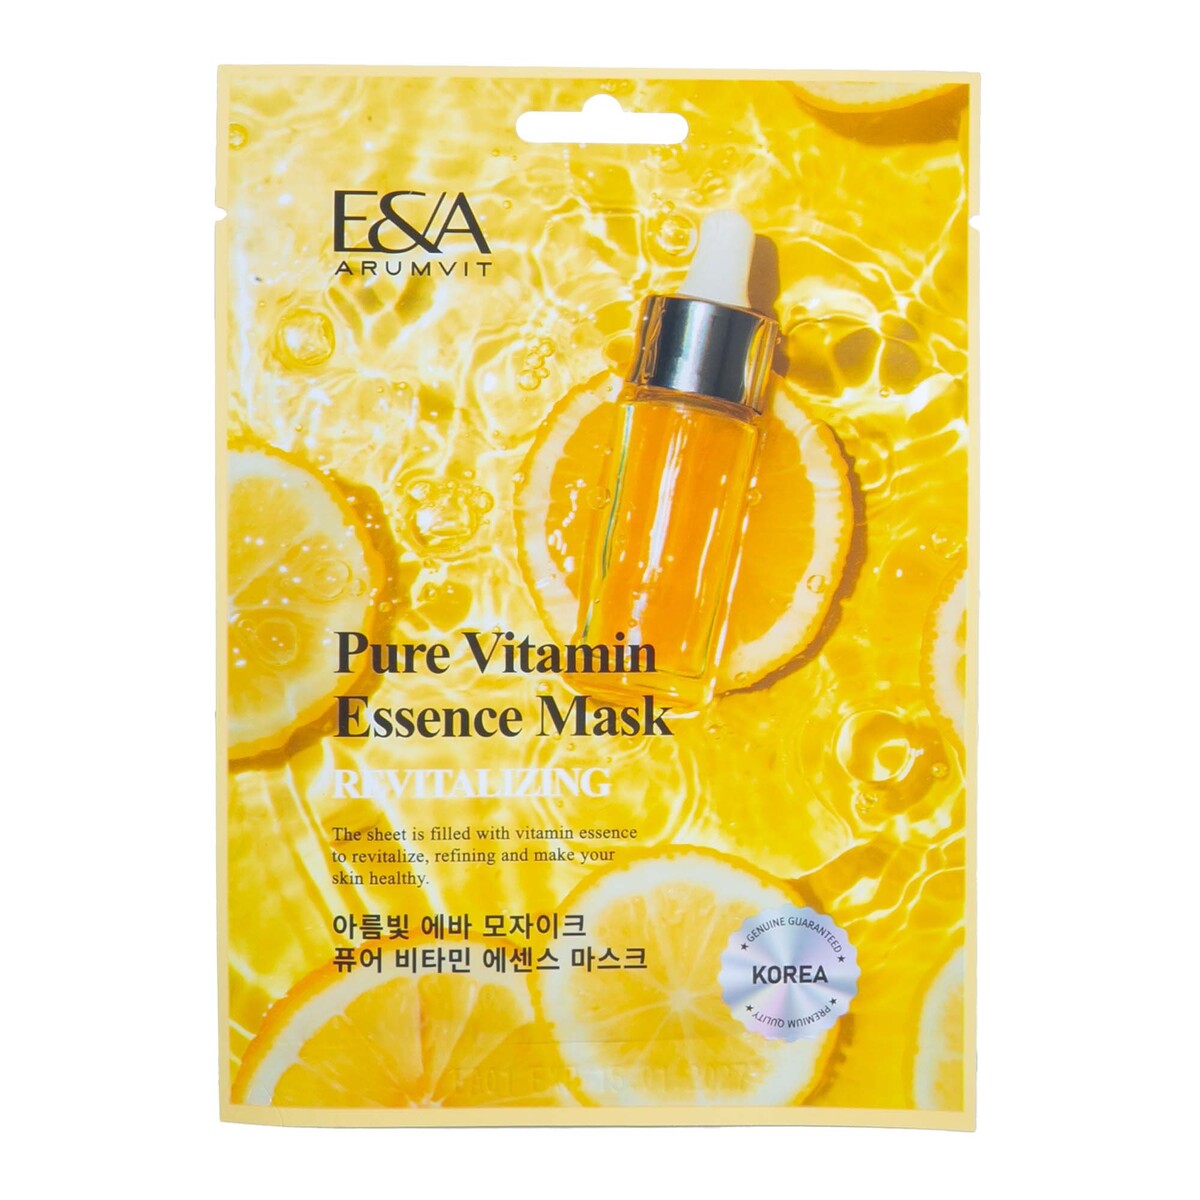 Arumvit Eva Mosaic Pure Vitamin Essence Mask, 25 g